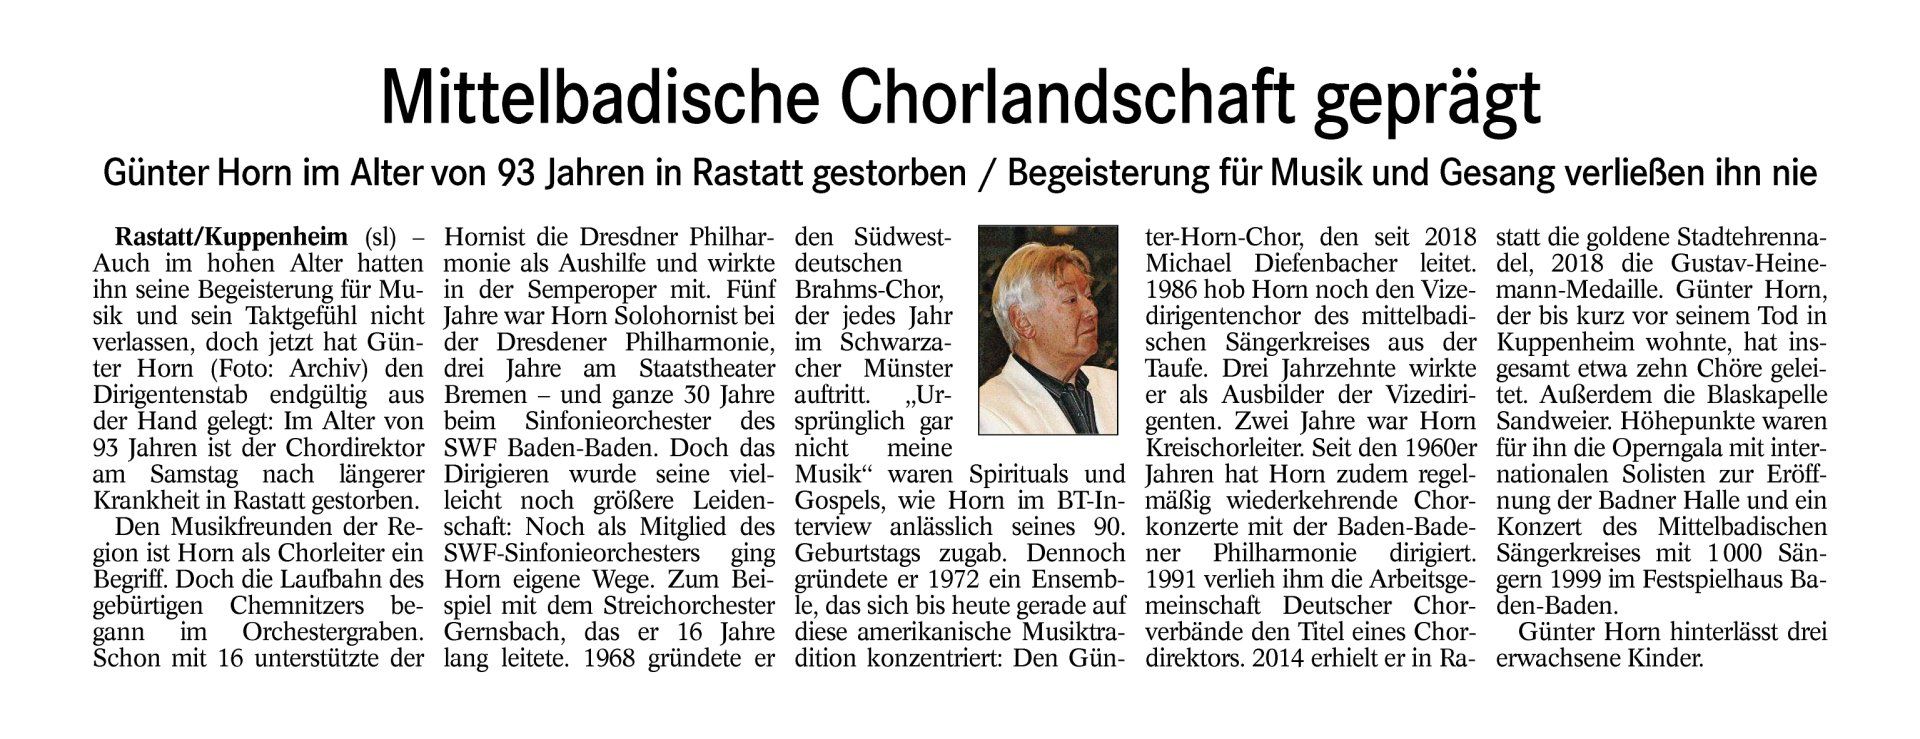 Nachruf Günter Horn, Badisches Tagblatt, 07.07.2020